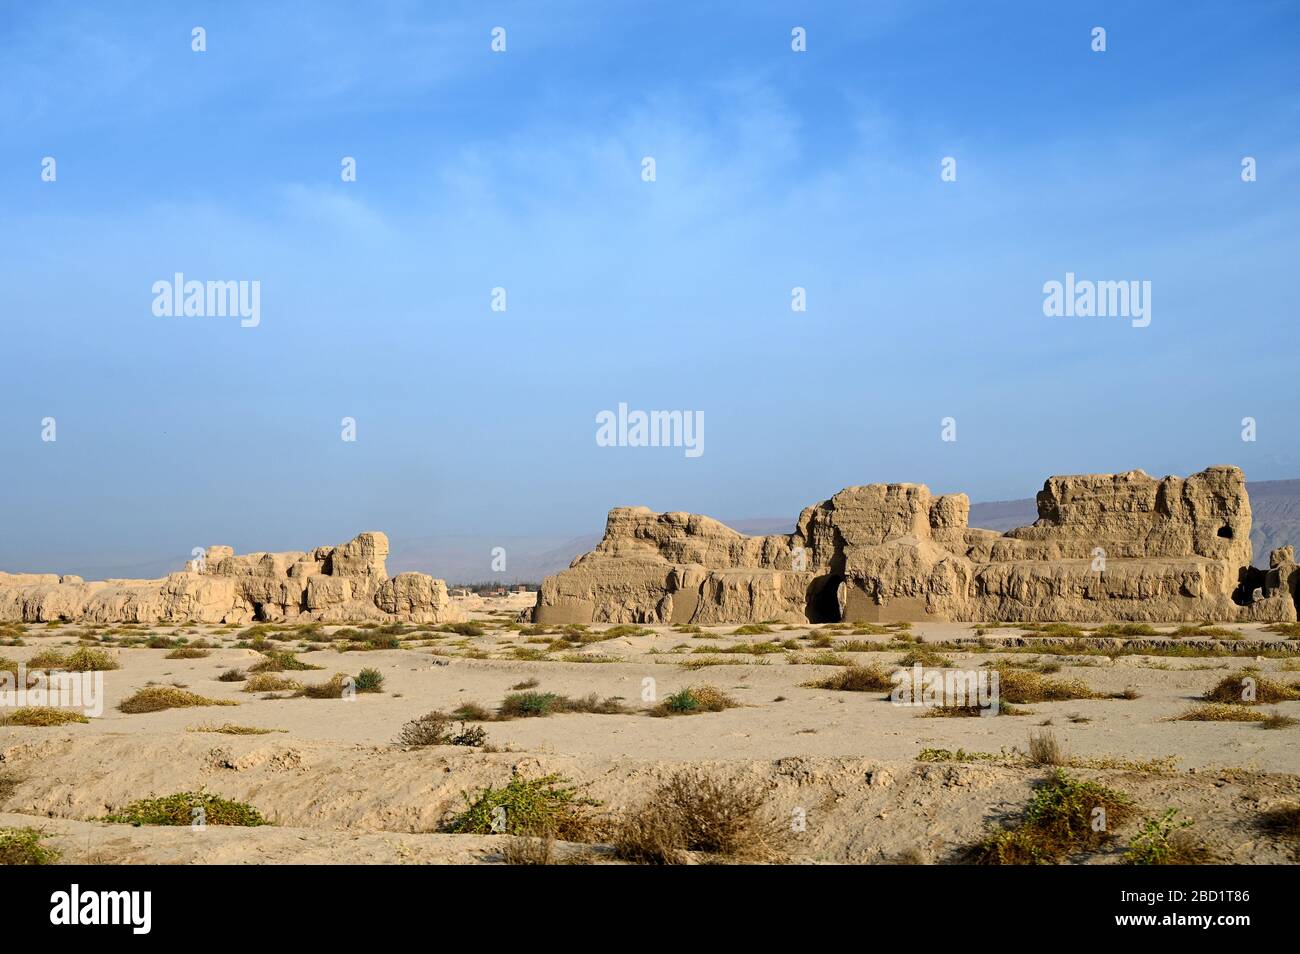 Rovine antica città oasi di Via della Seta di Gaochang, deserto di Taklamakan, Xinjiang, Cina, Asia Foto Stock